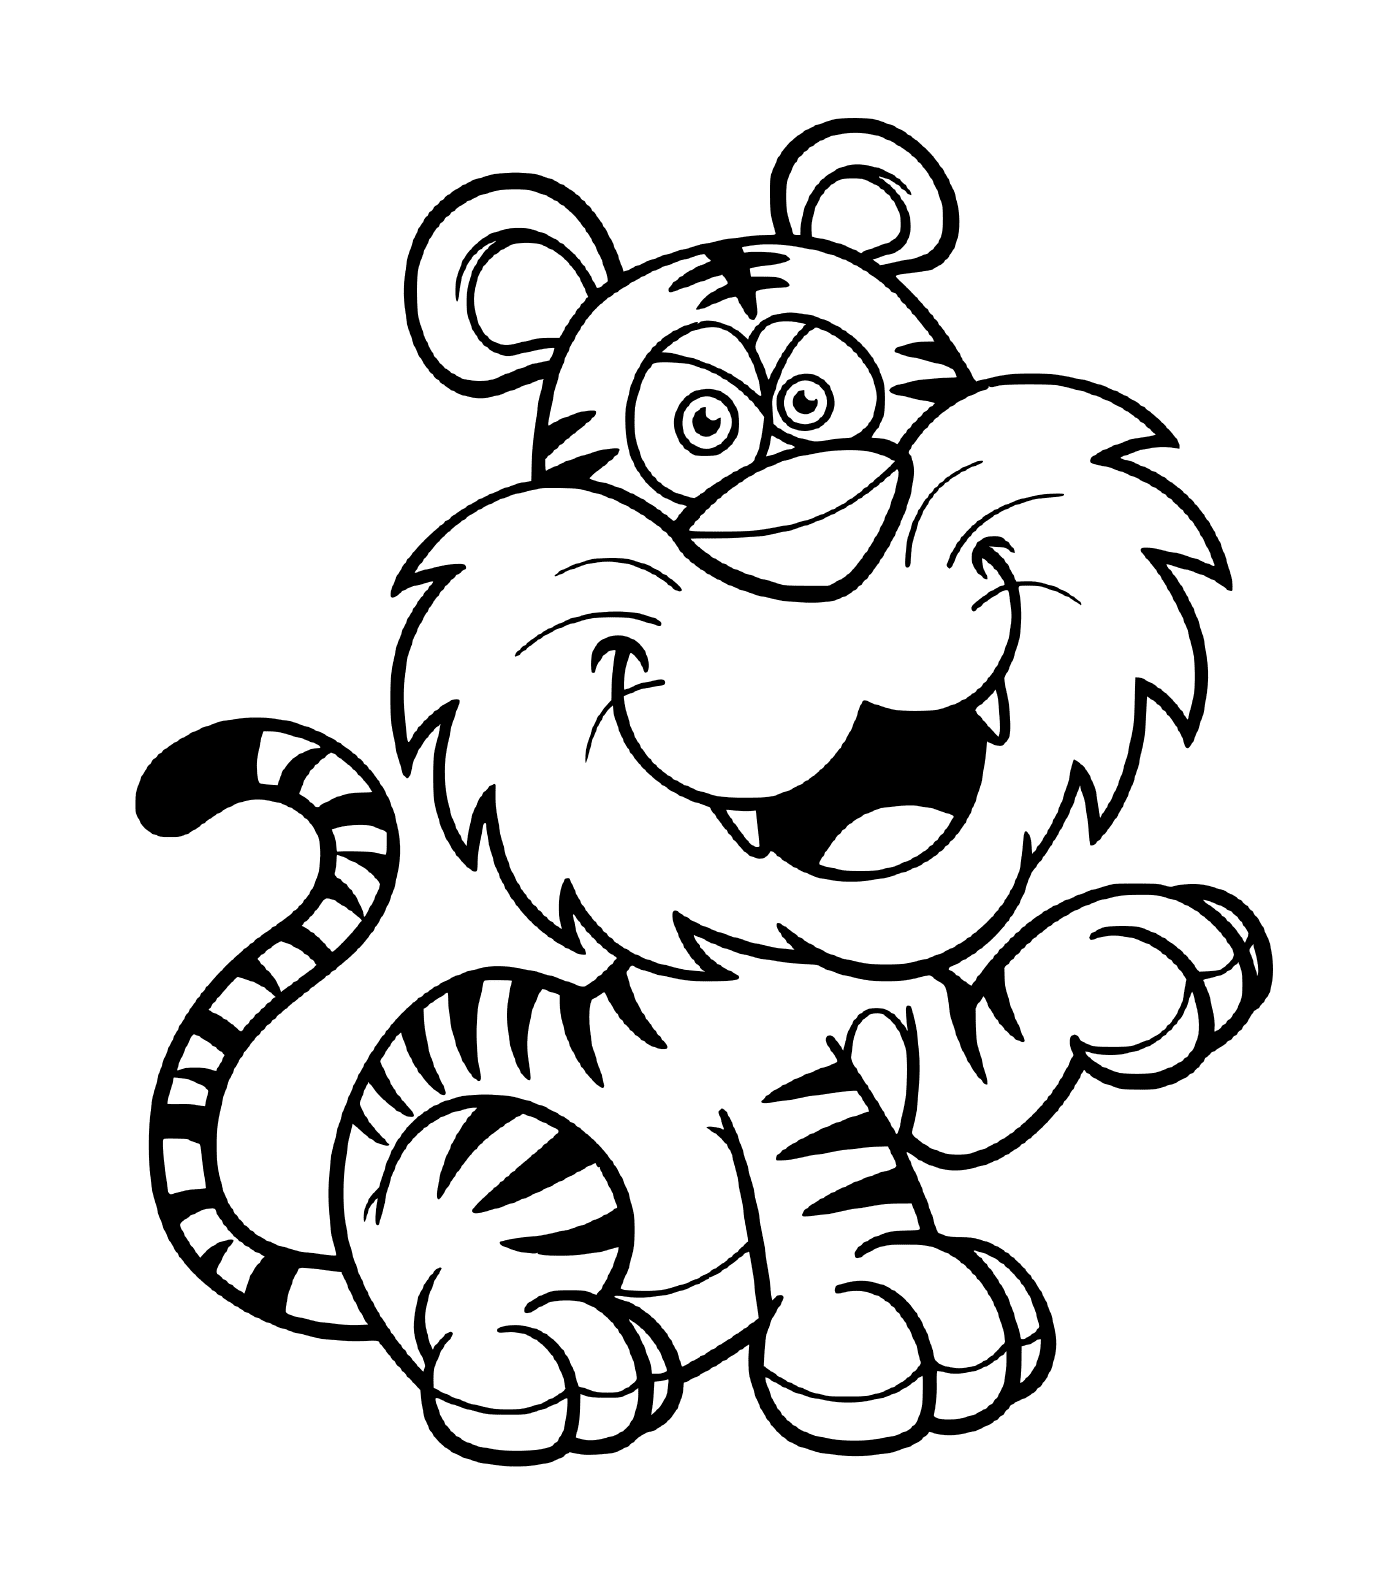  A smiling tiger animates 